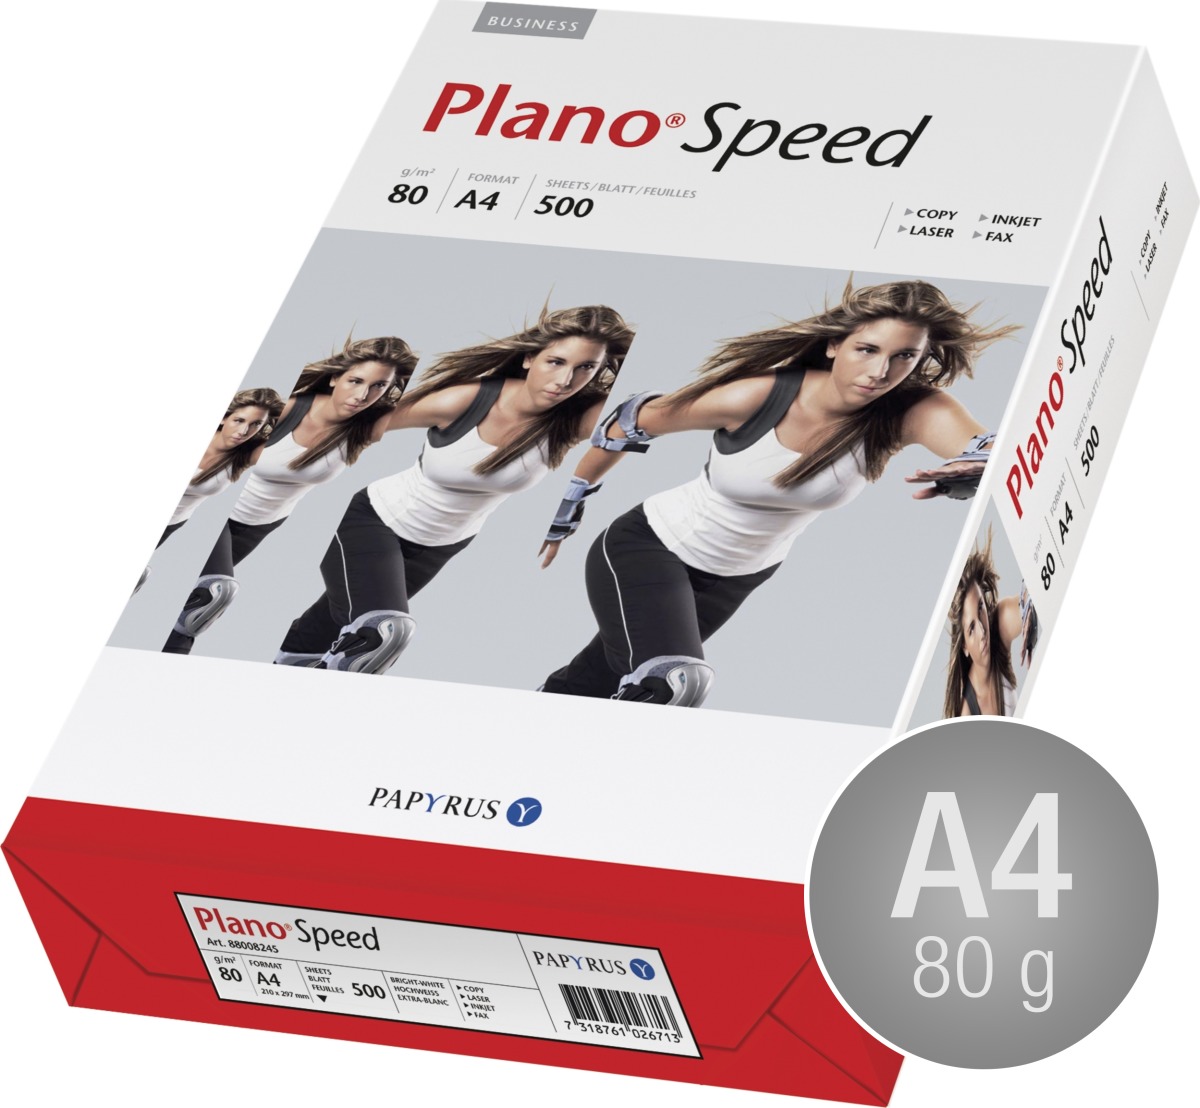 PlanoSpeed kopipapir A4/80g/500ark